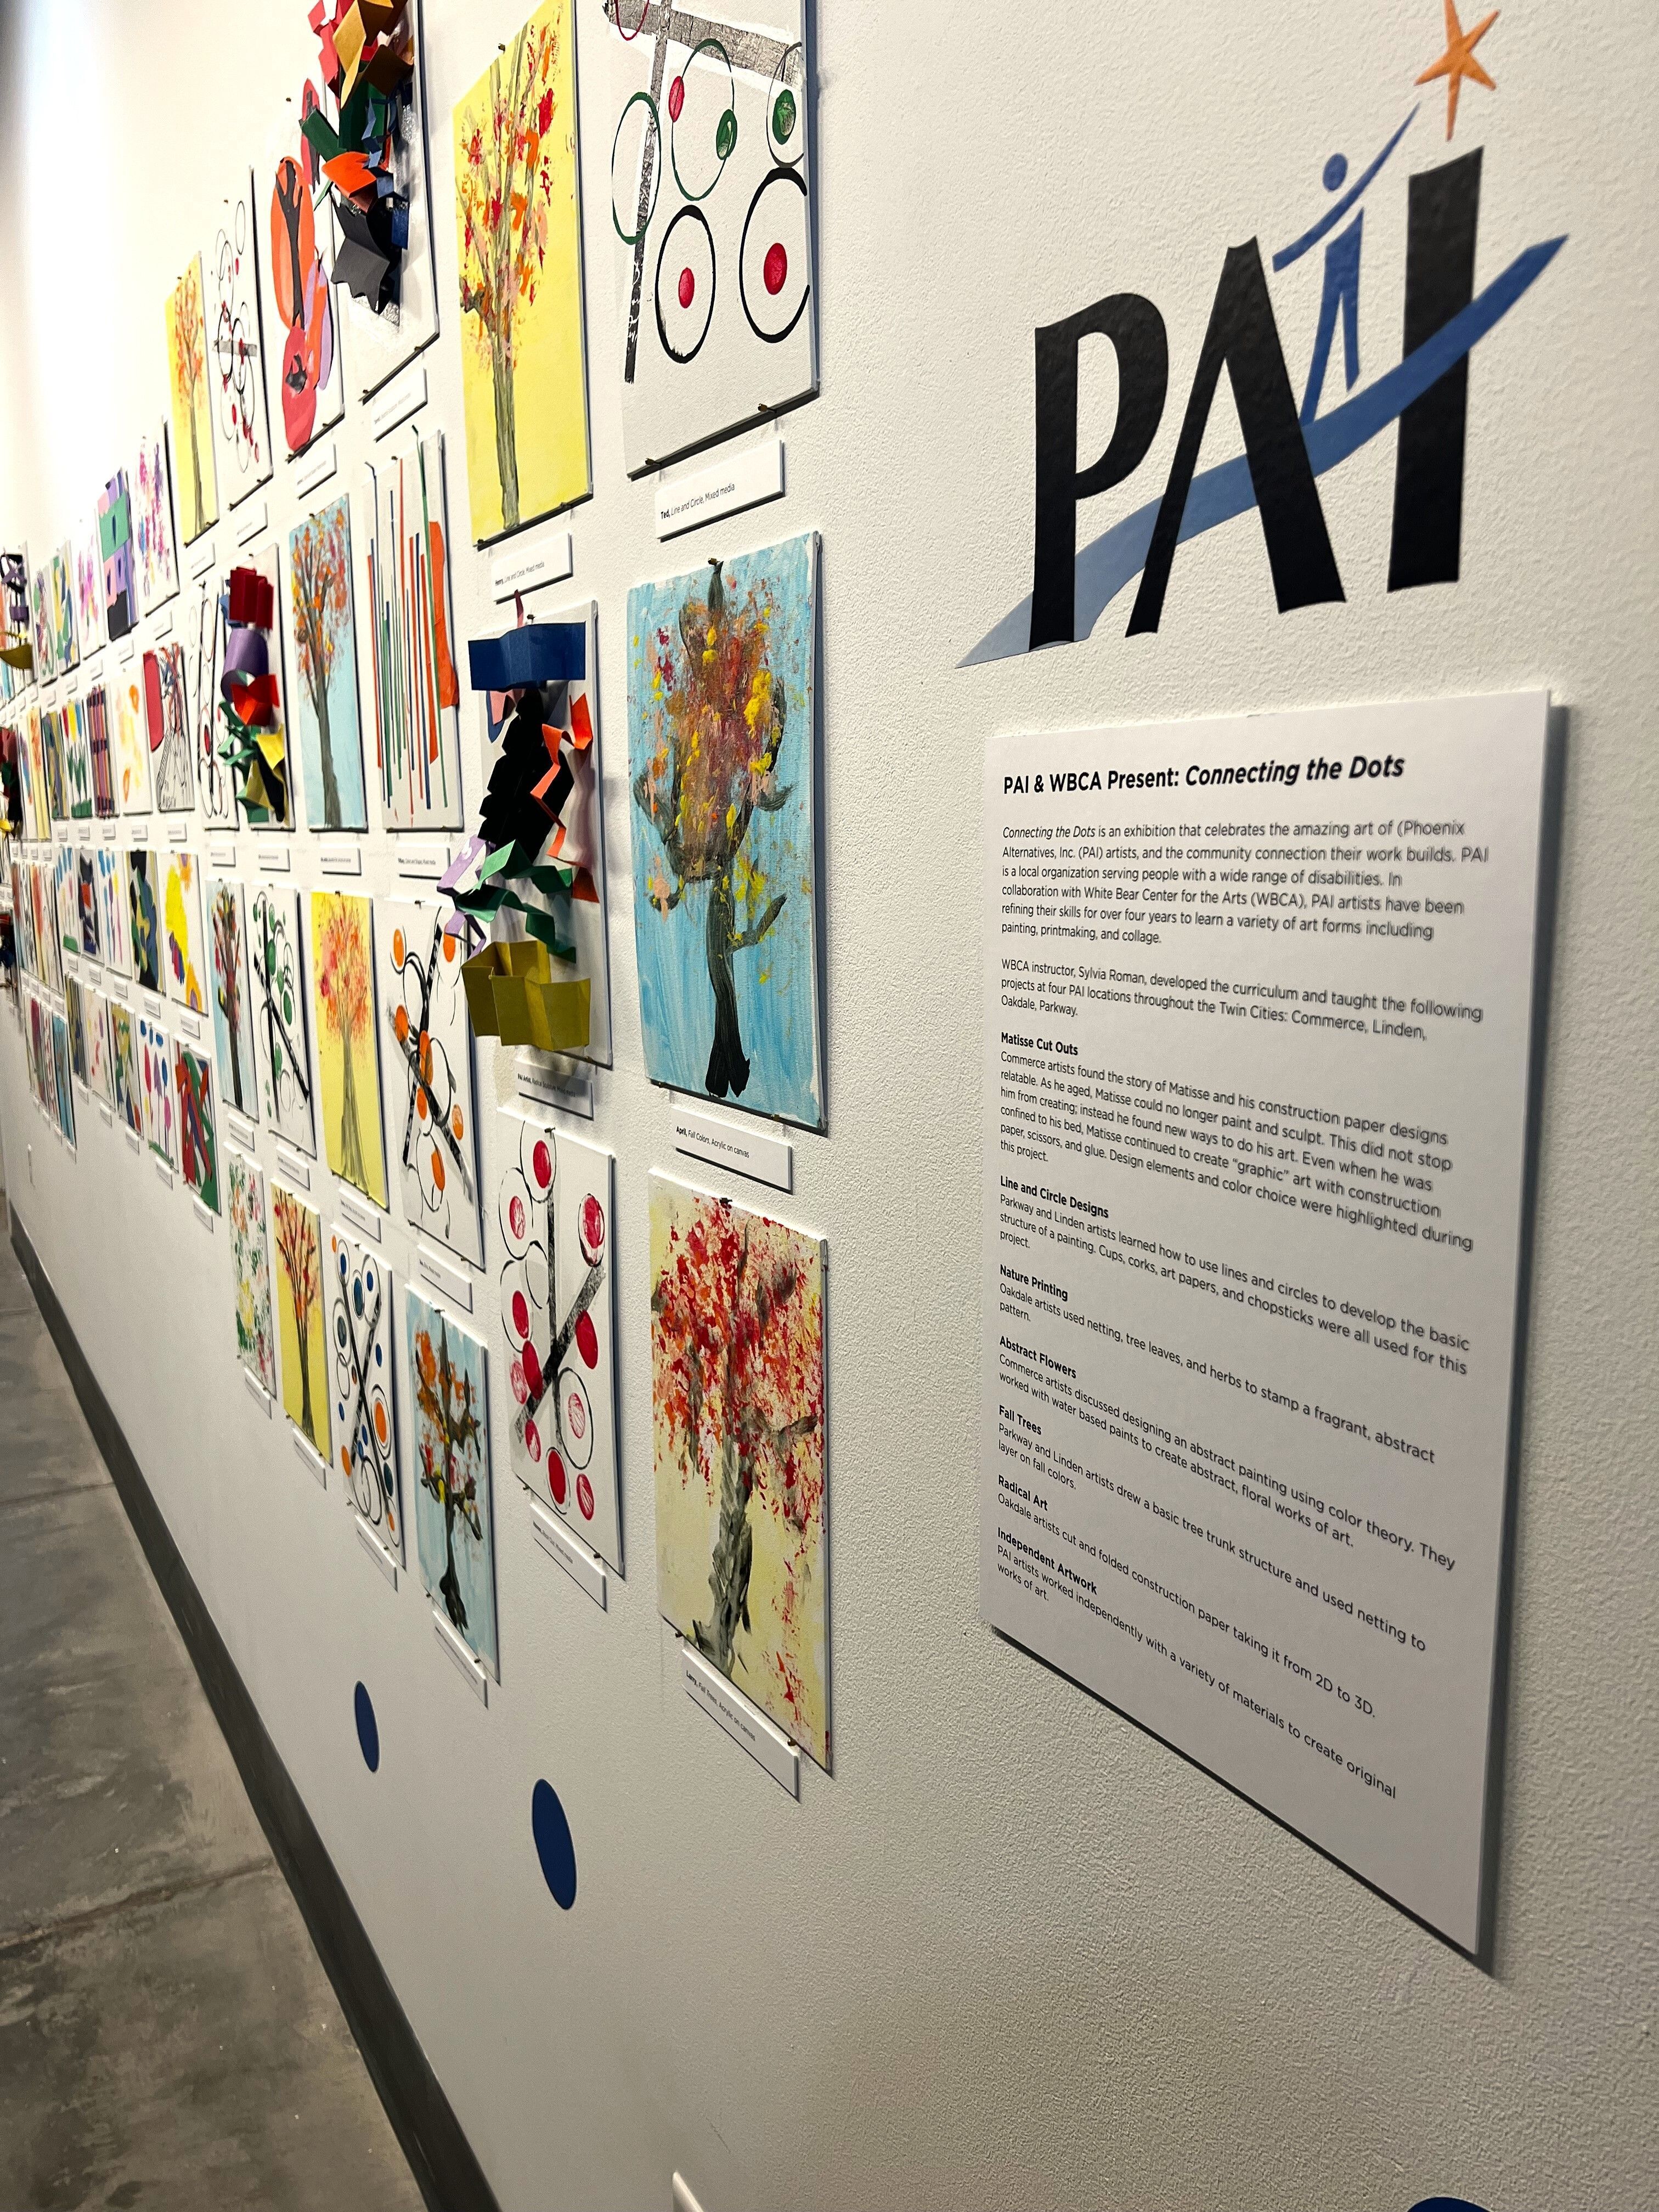 Local Gallery to Exhibit PAI Art